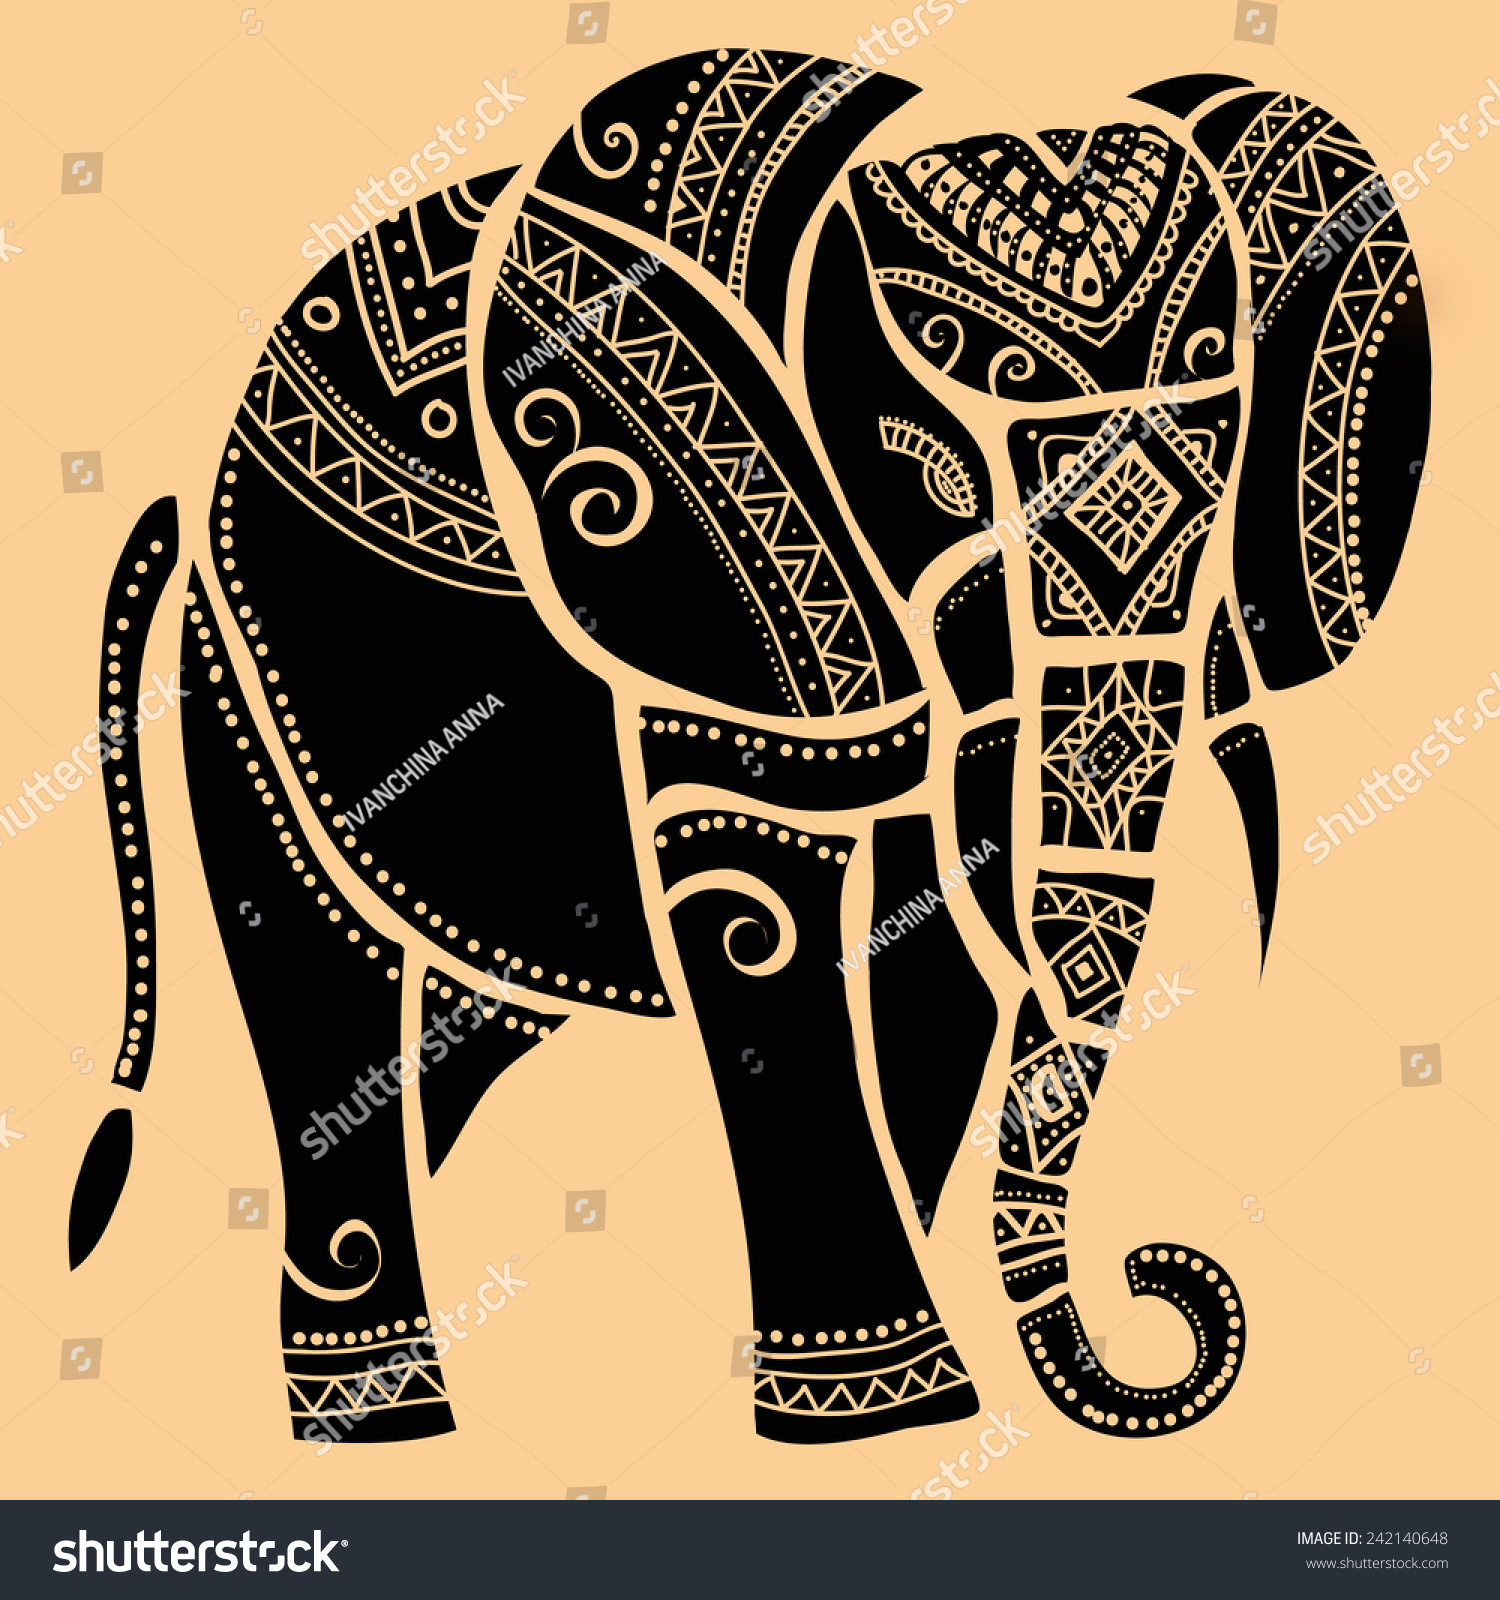 SVG of elephant.Silhouette of elephant. svg